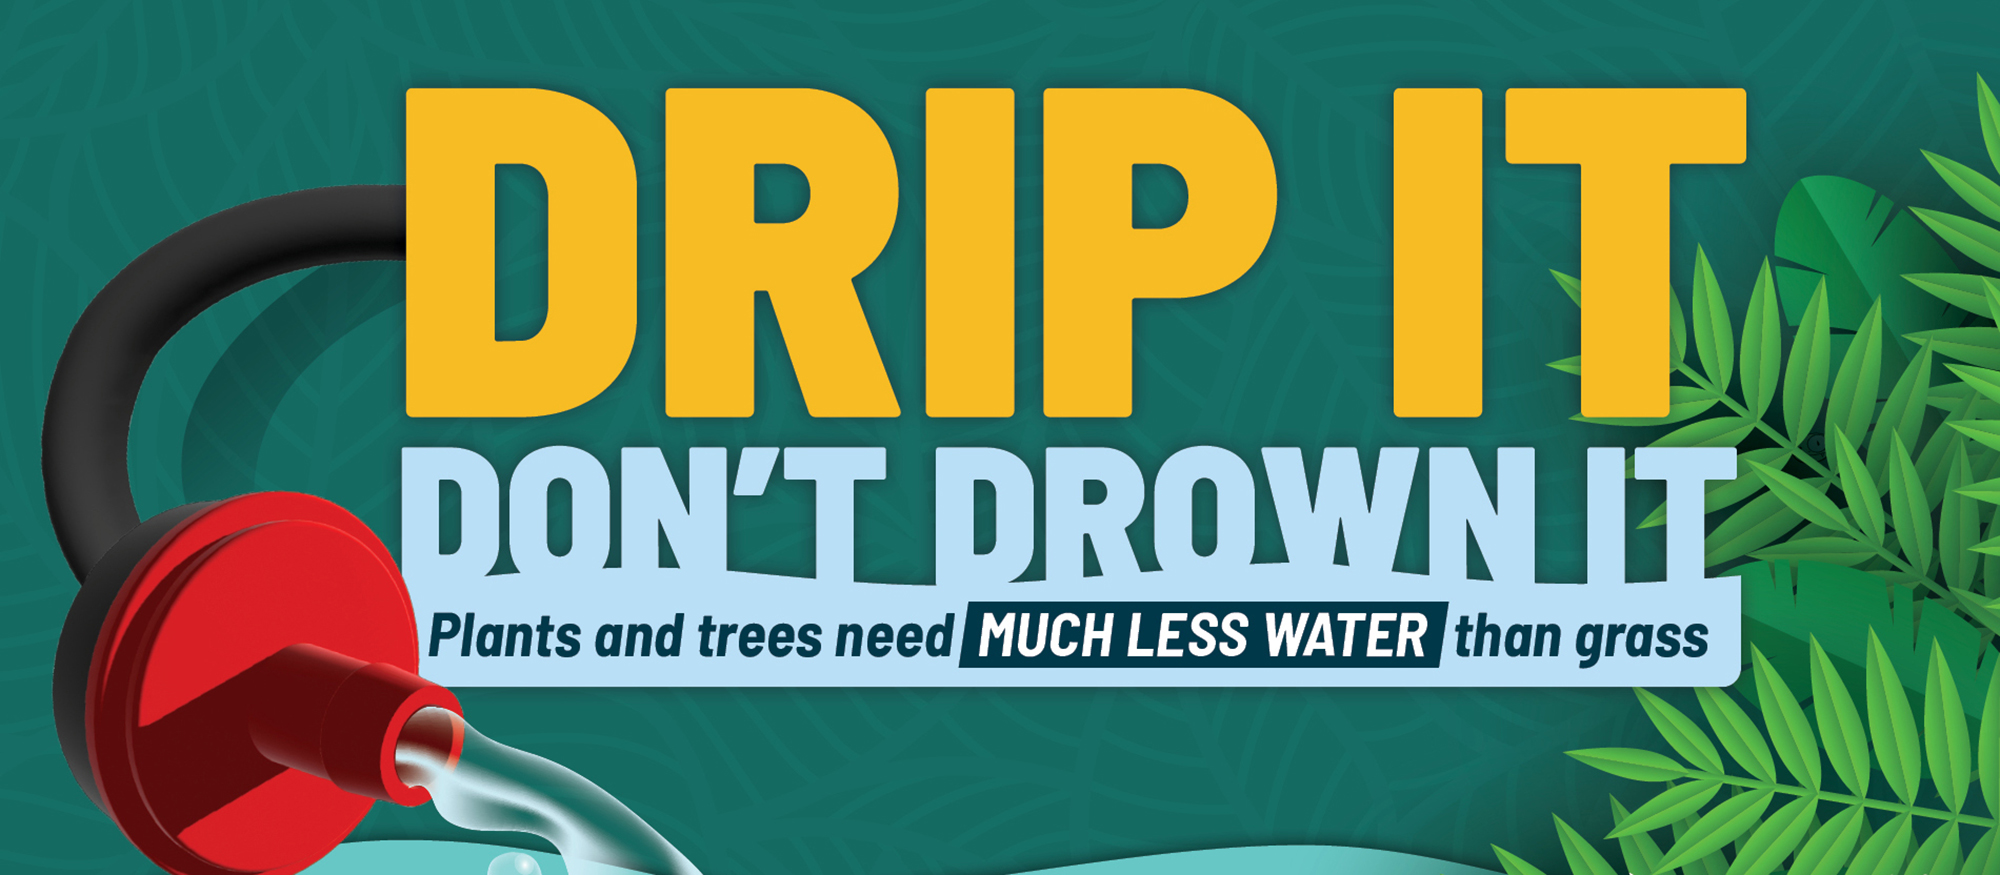 Drip irrigation tips